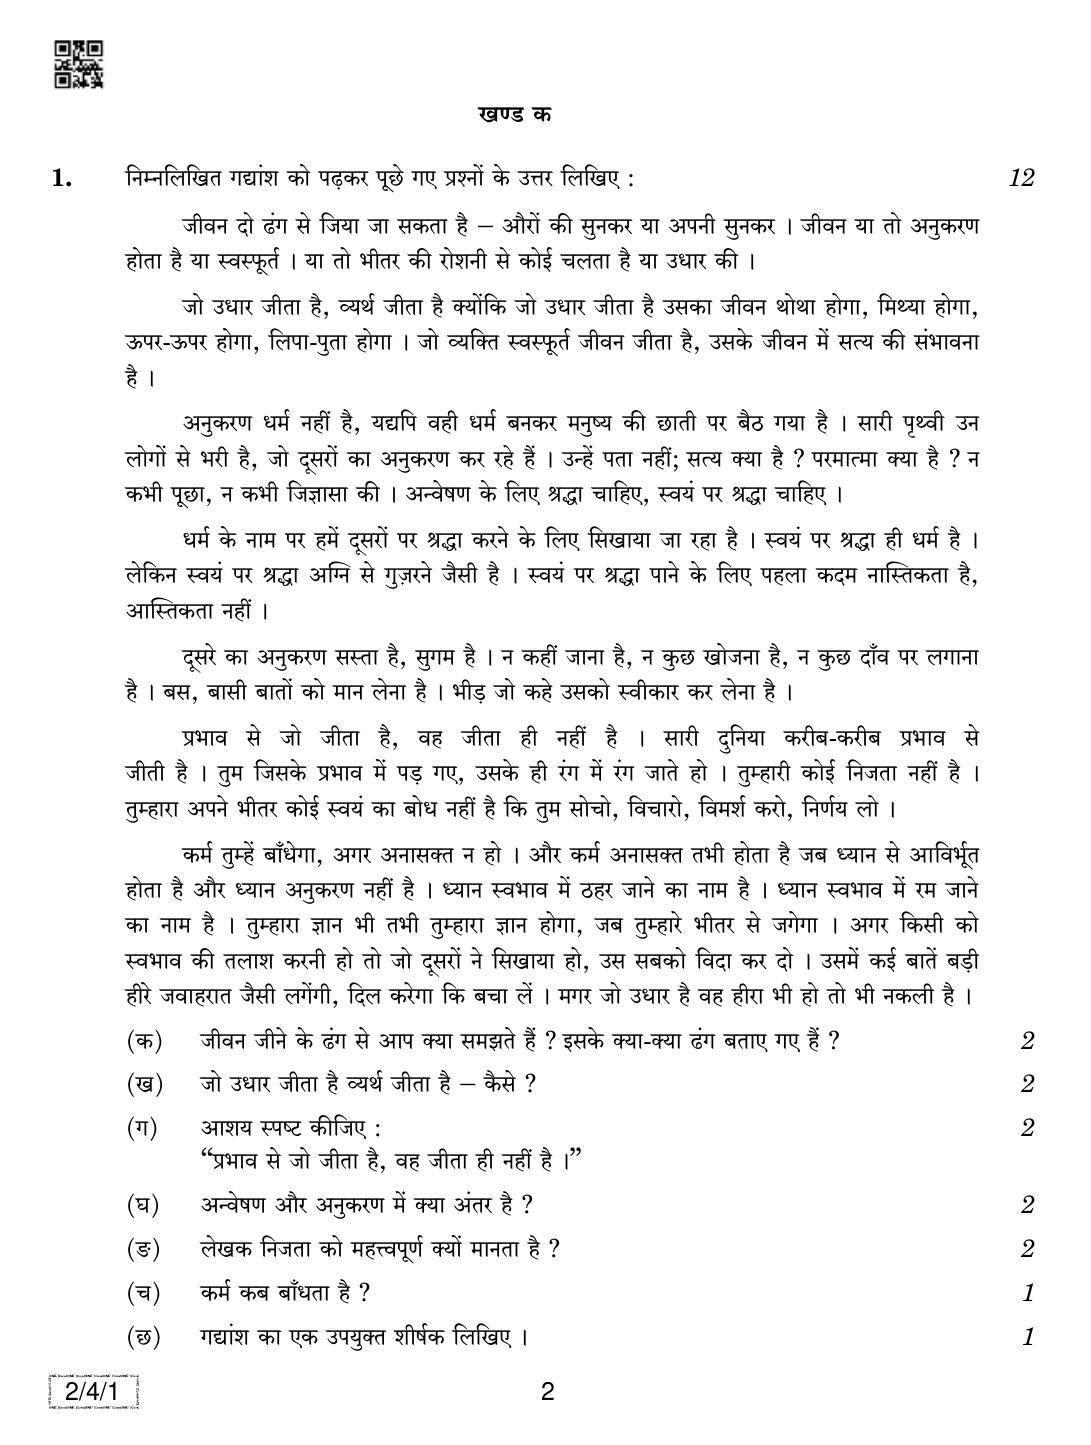 CBSE Class 12 2-4-1 Hindi Core 2019 Question Paper - Page 2